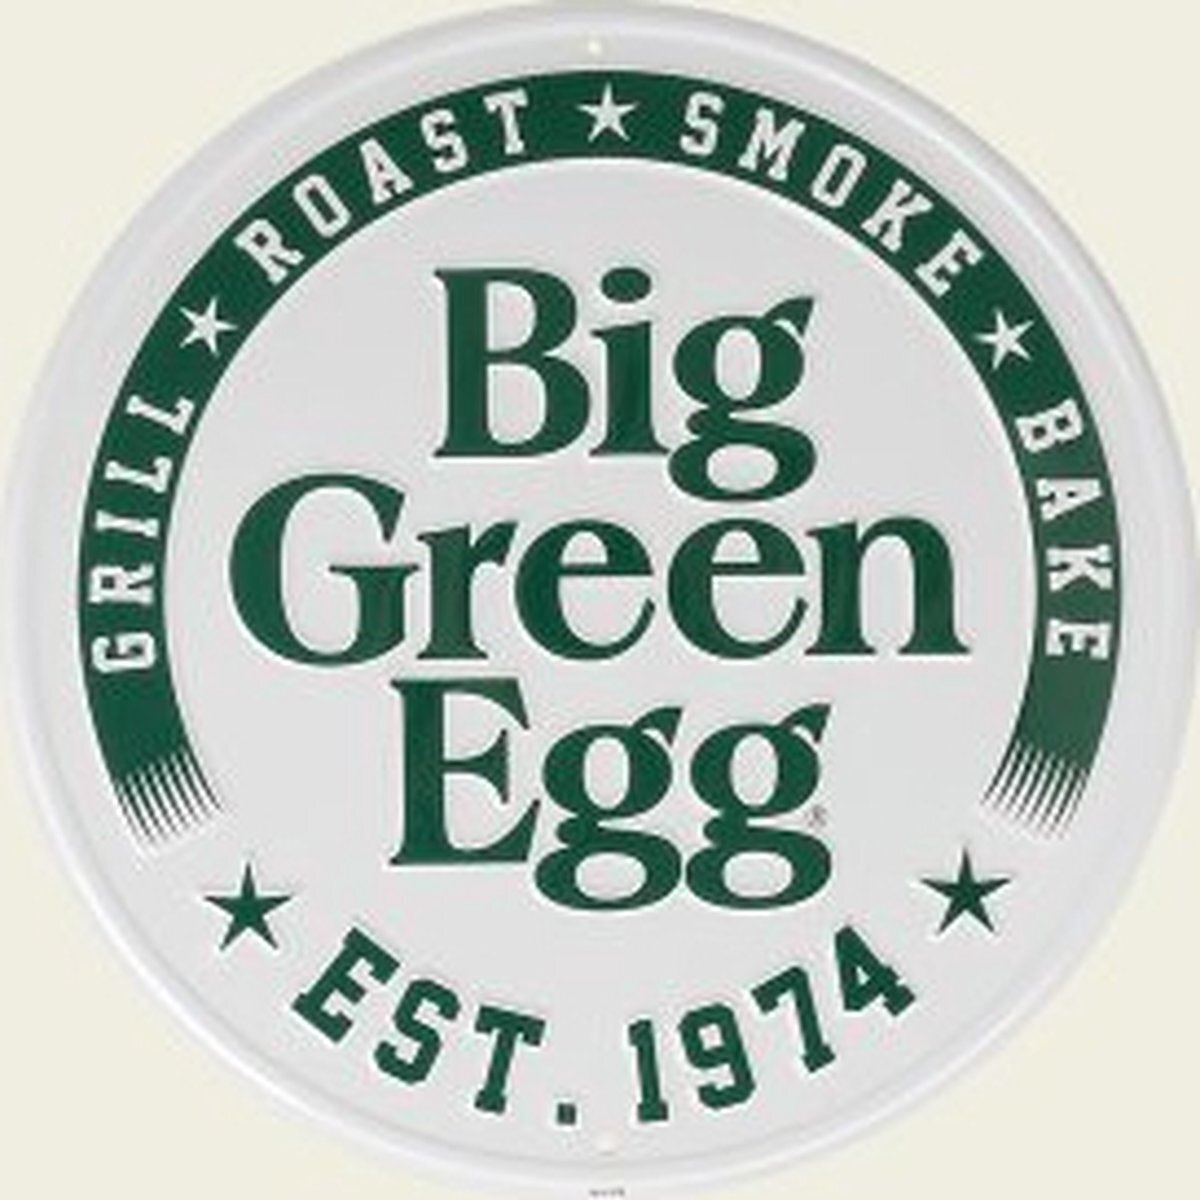 Big Green Egg - Bord - Wandbord - Grill - Roast - Smoke - Bake - 1974